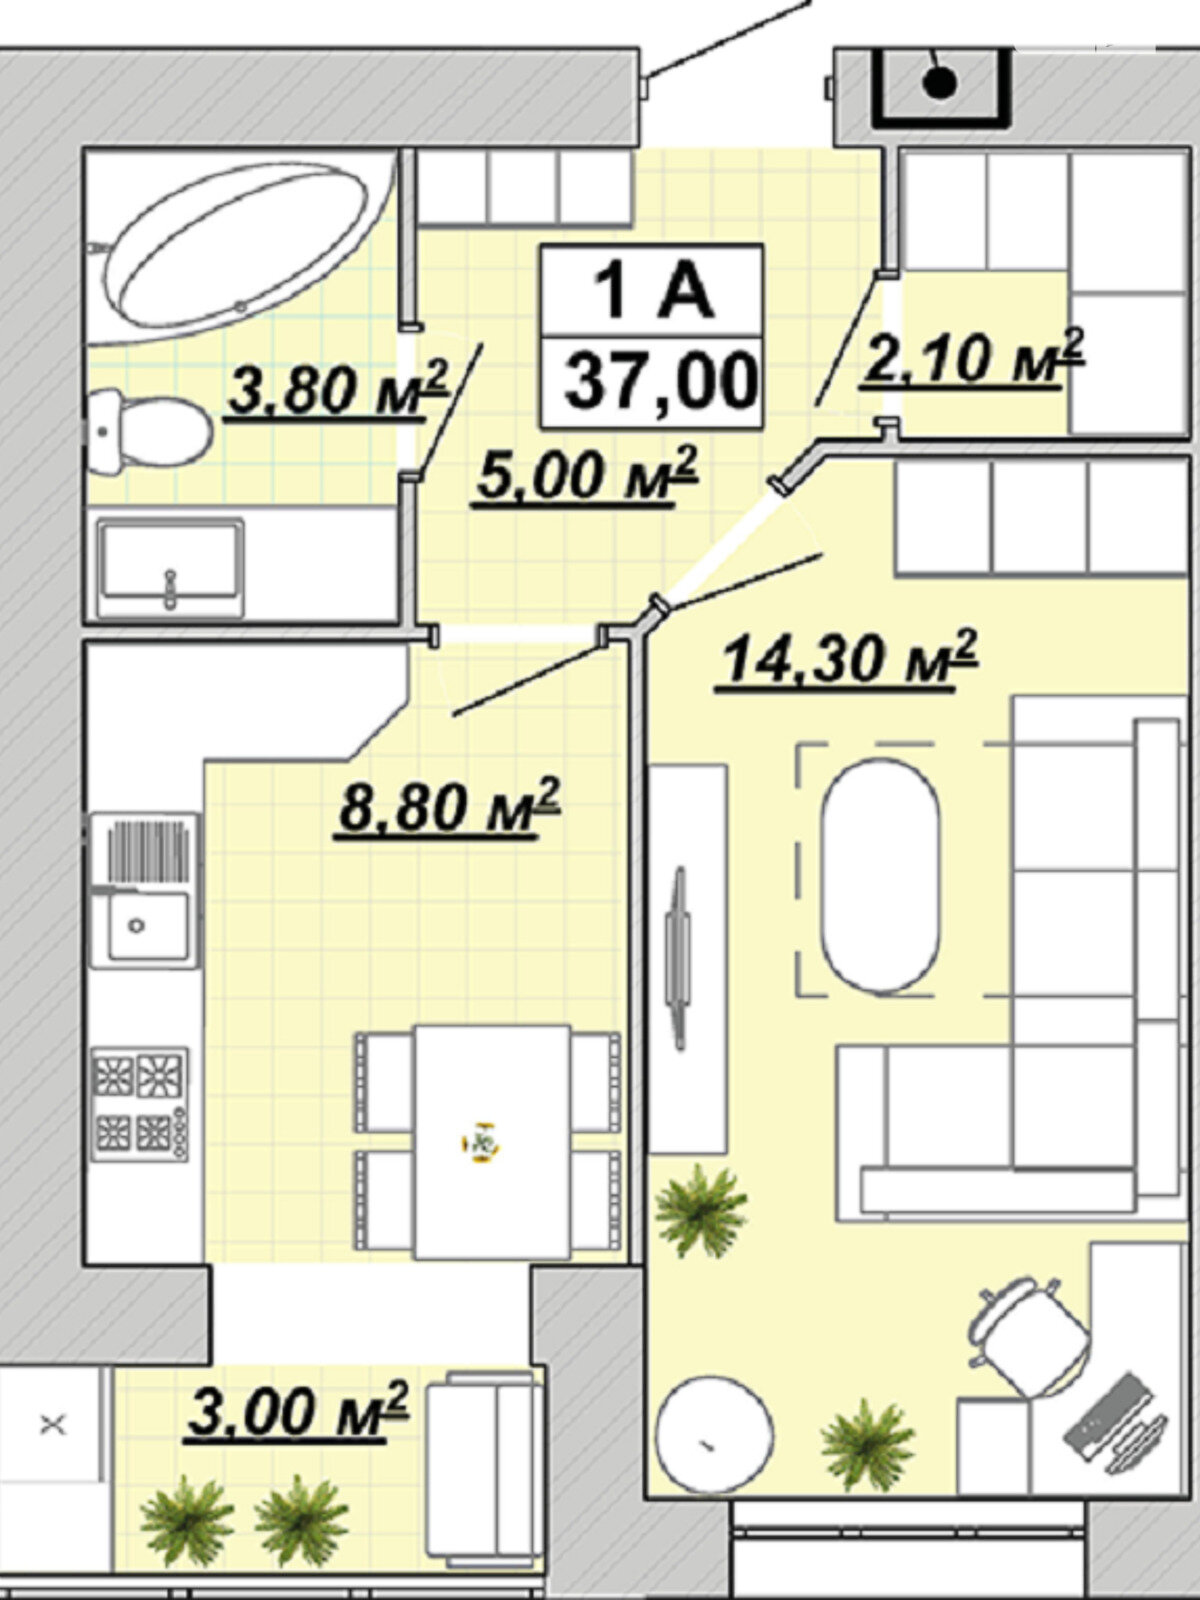 Продажа однокомнатной квартиры в Ивано-Франковске, на ул. Княгинин 44, кв. 34, район Центр фото 1